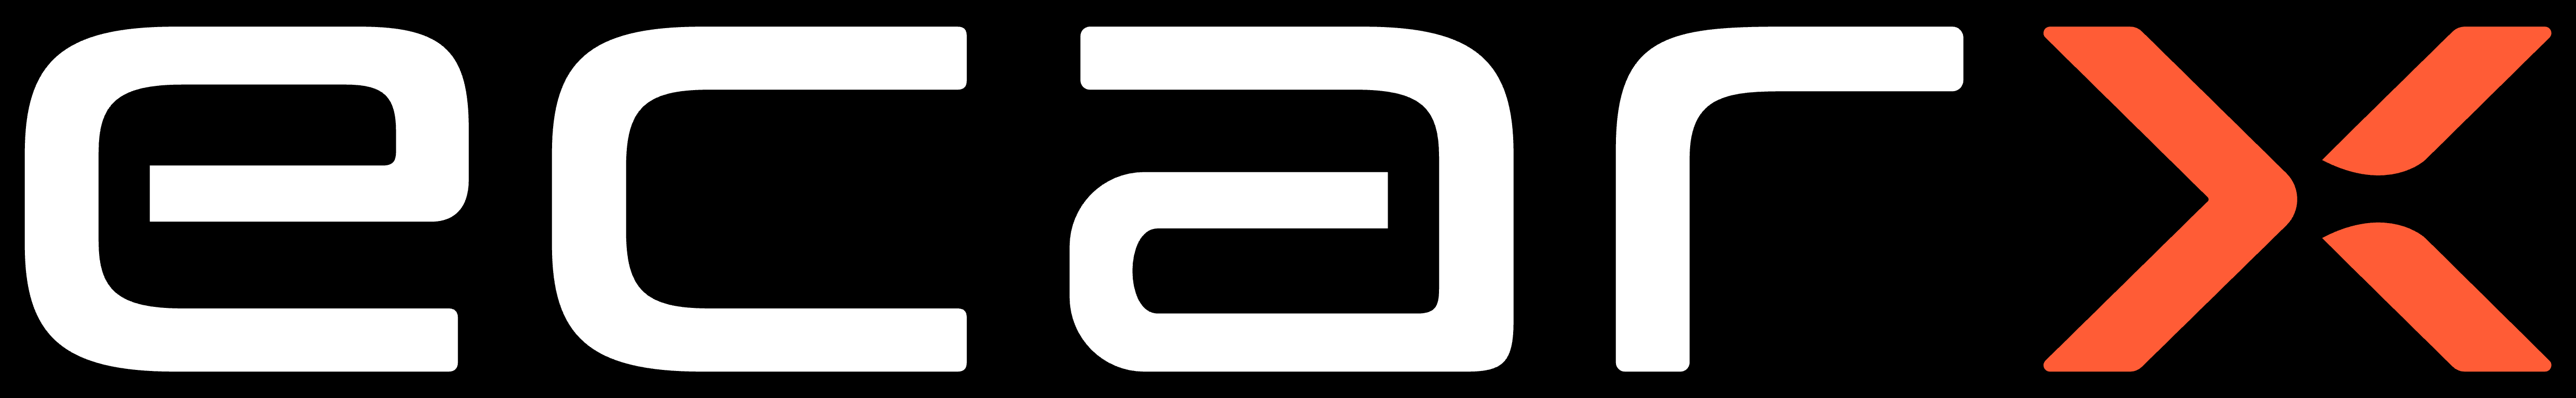 Ecarx Logo [Light].